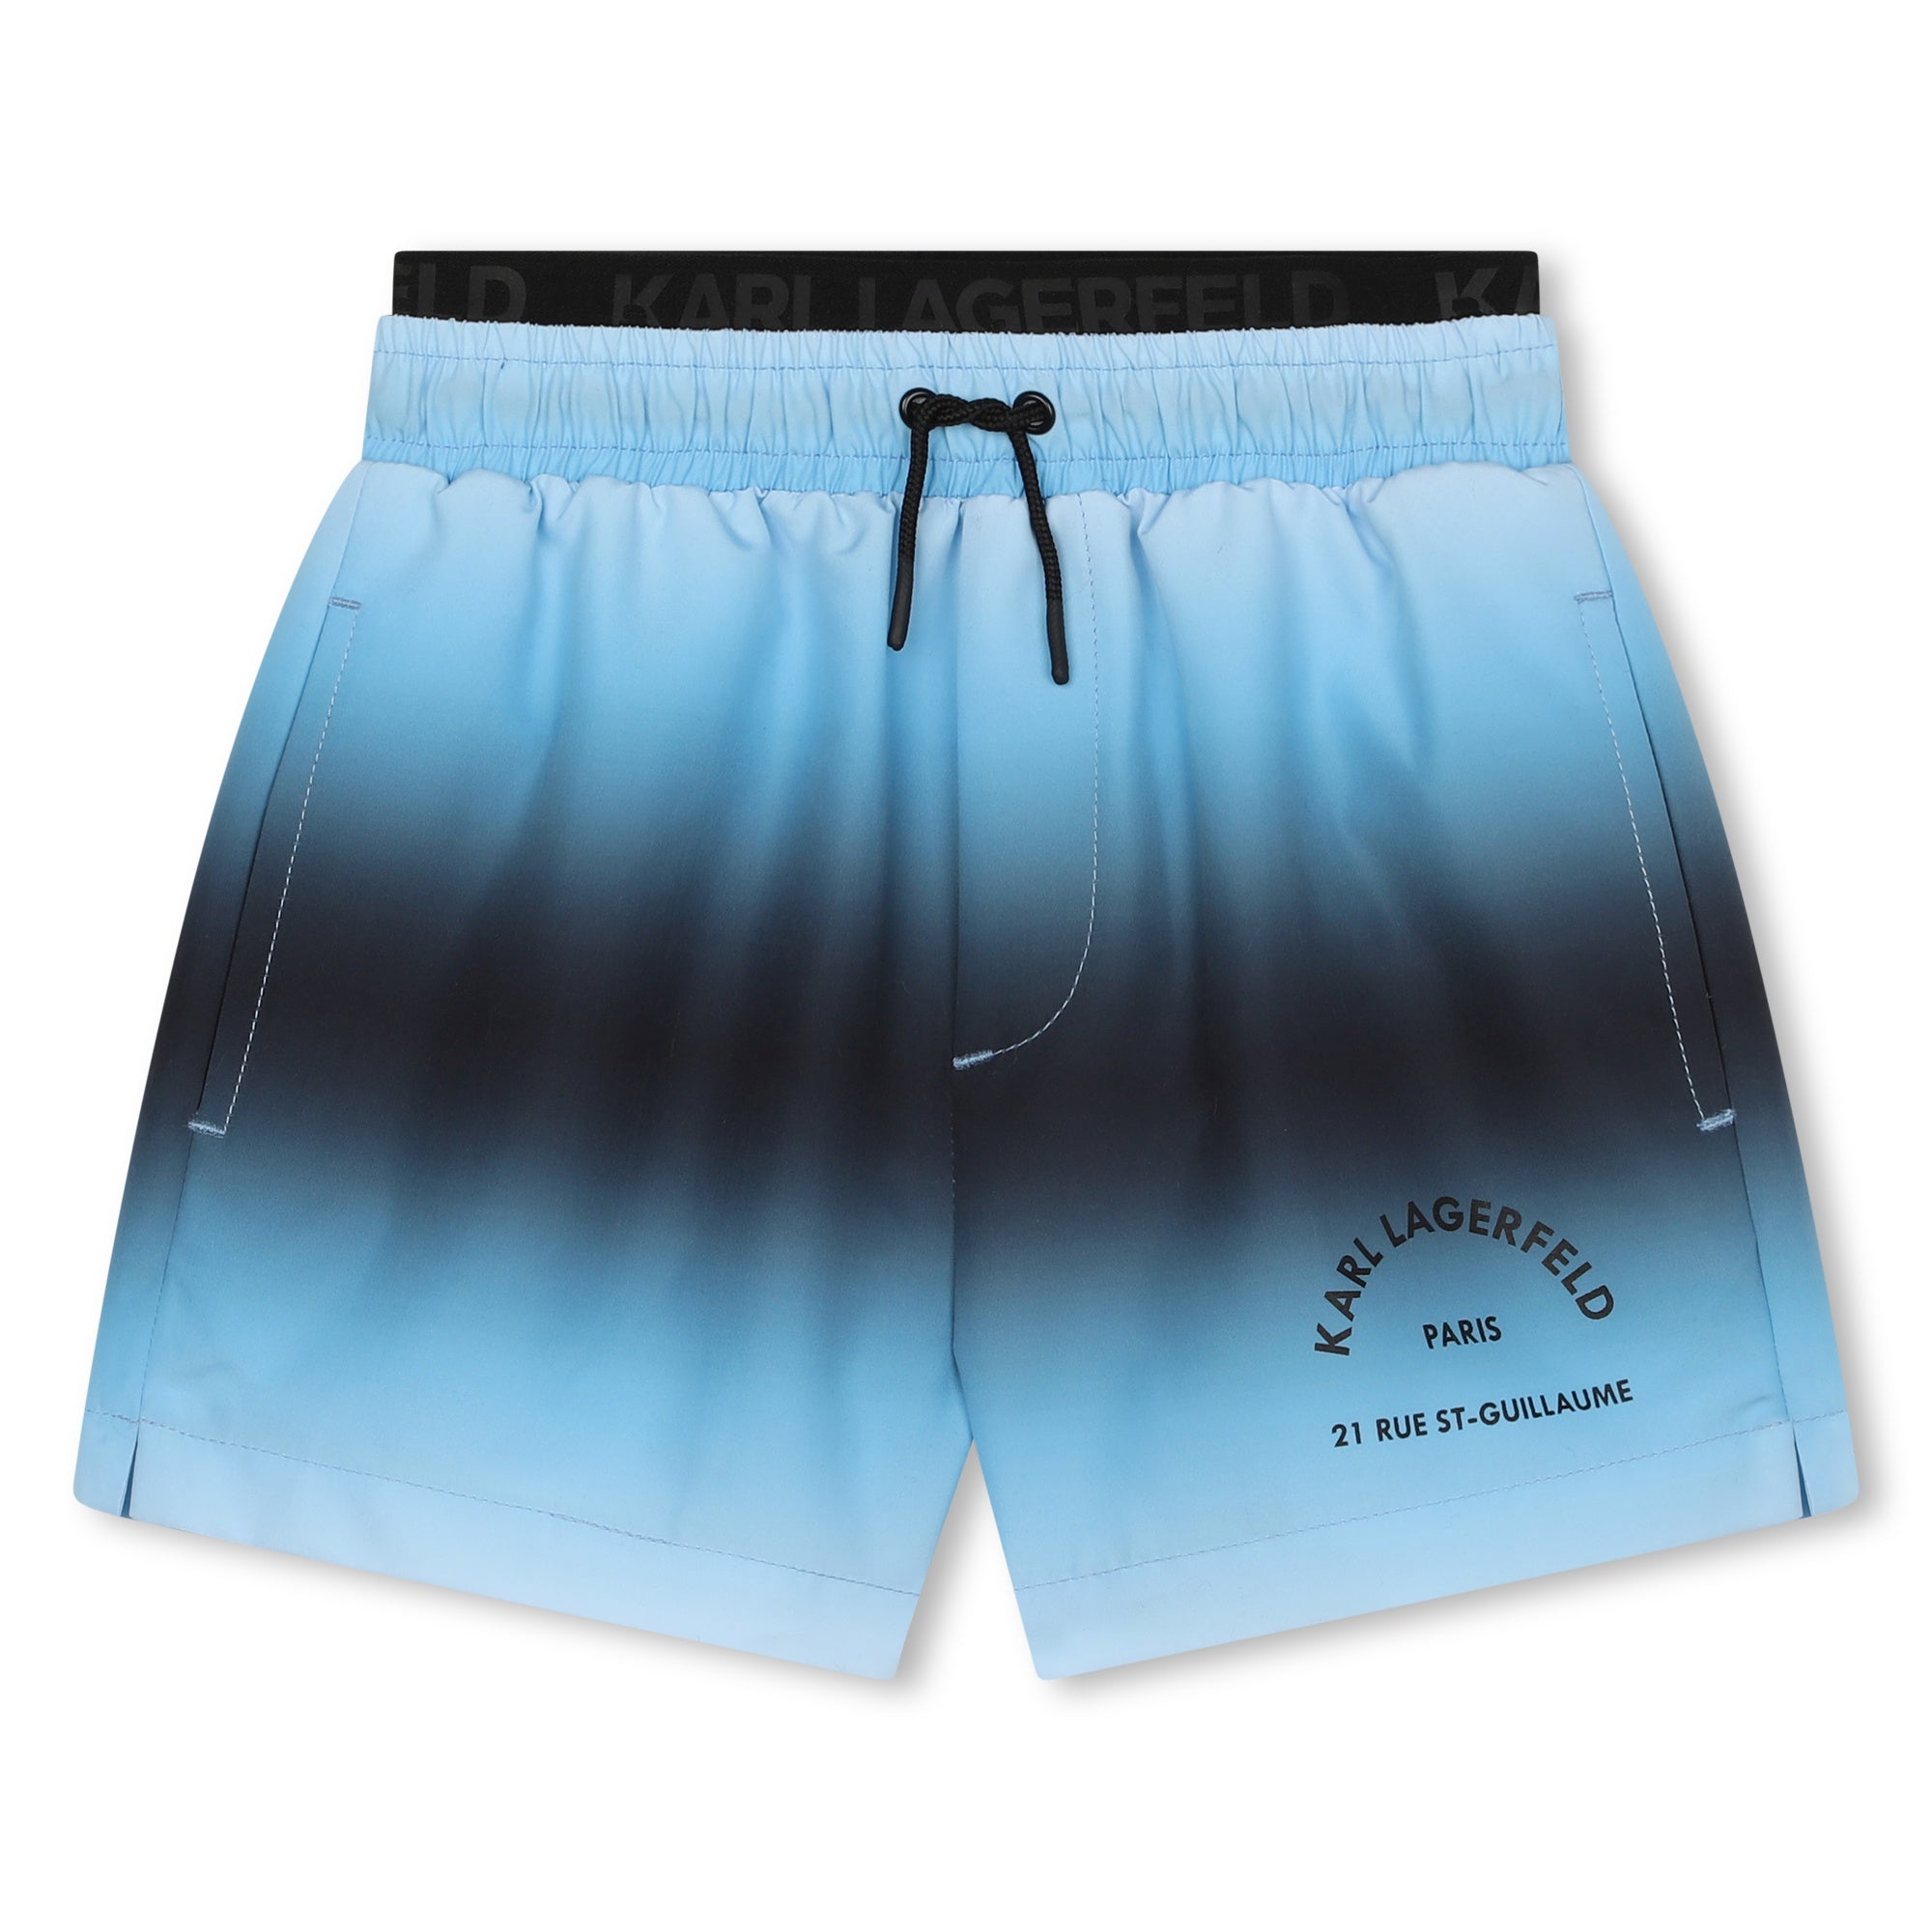 Karl Lagerfeld White and Blue Gradient Swim Shorts